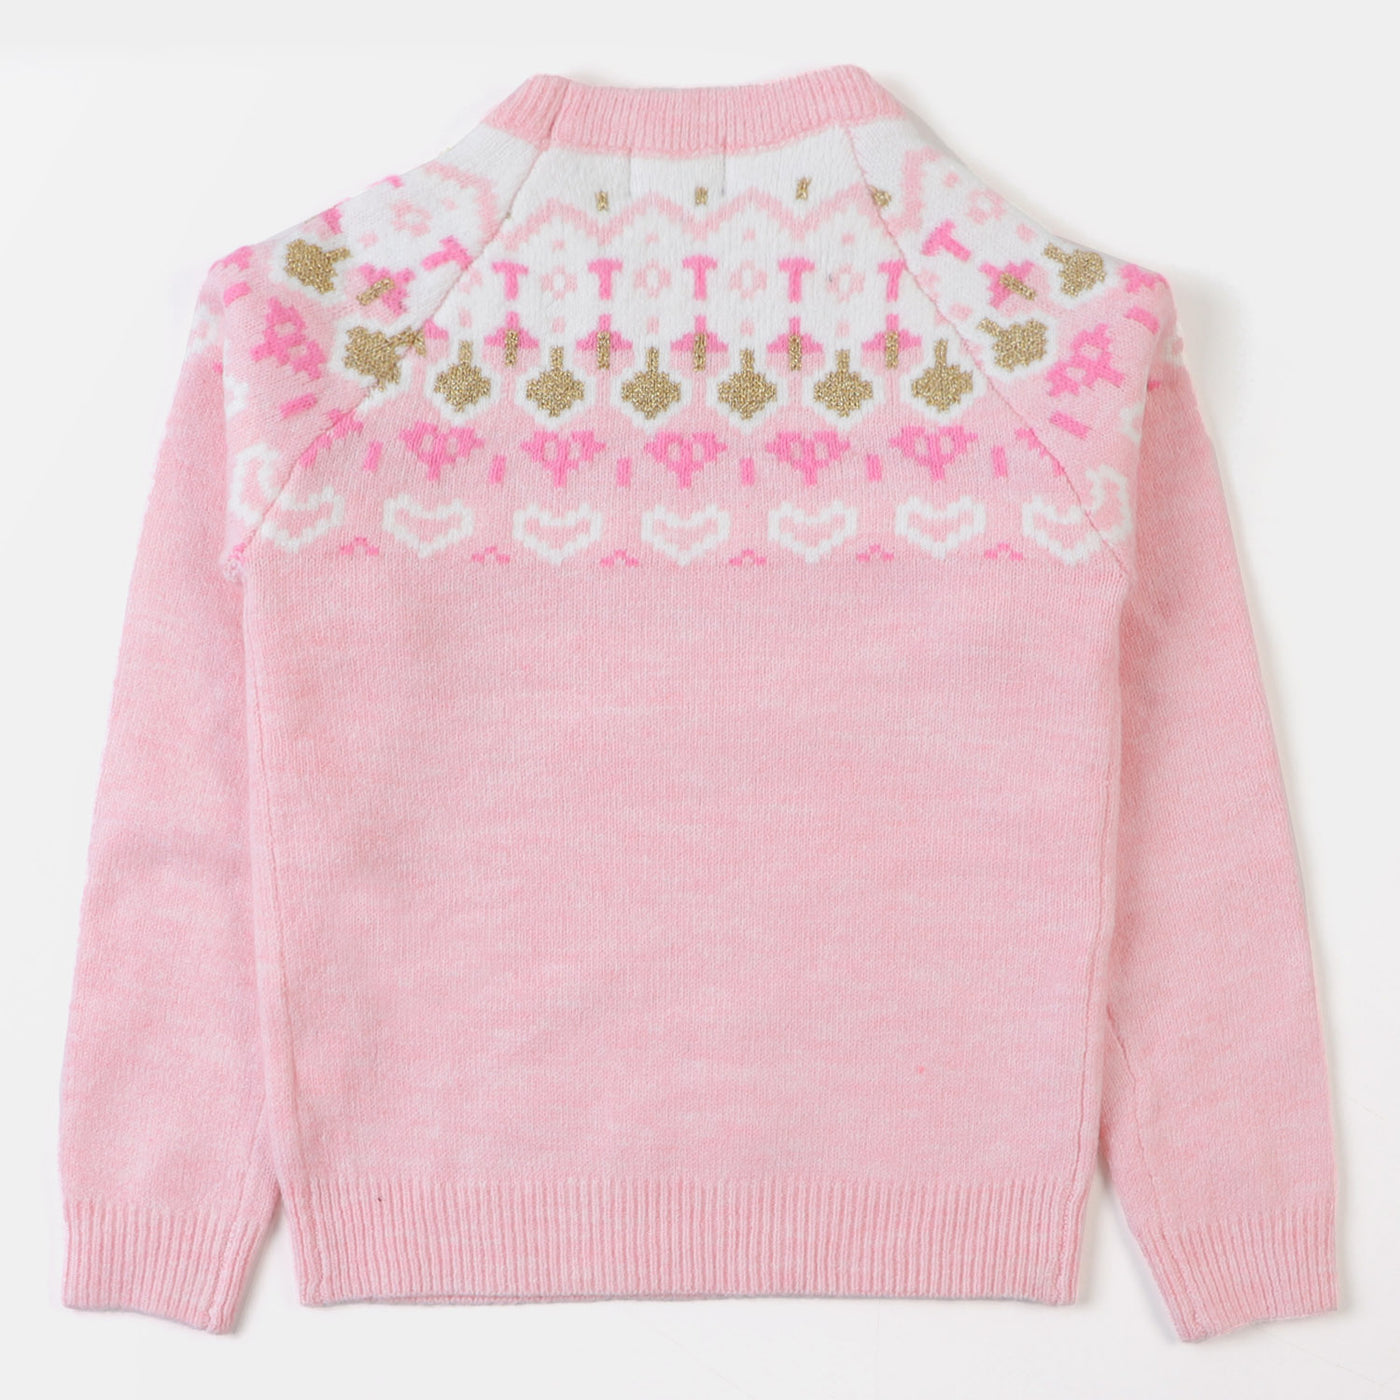 Girls Sweater - Pink